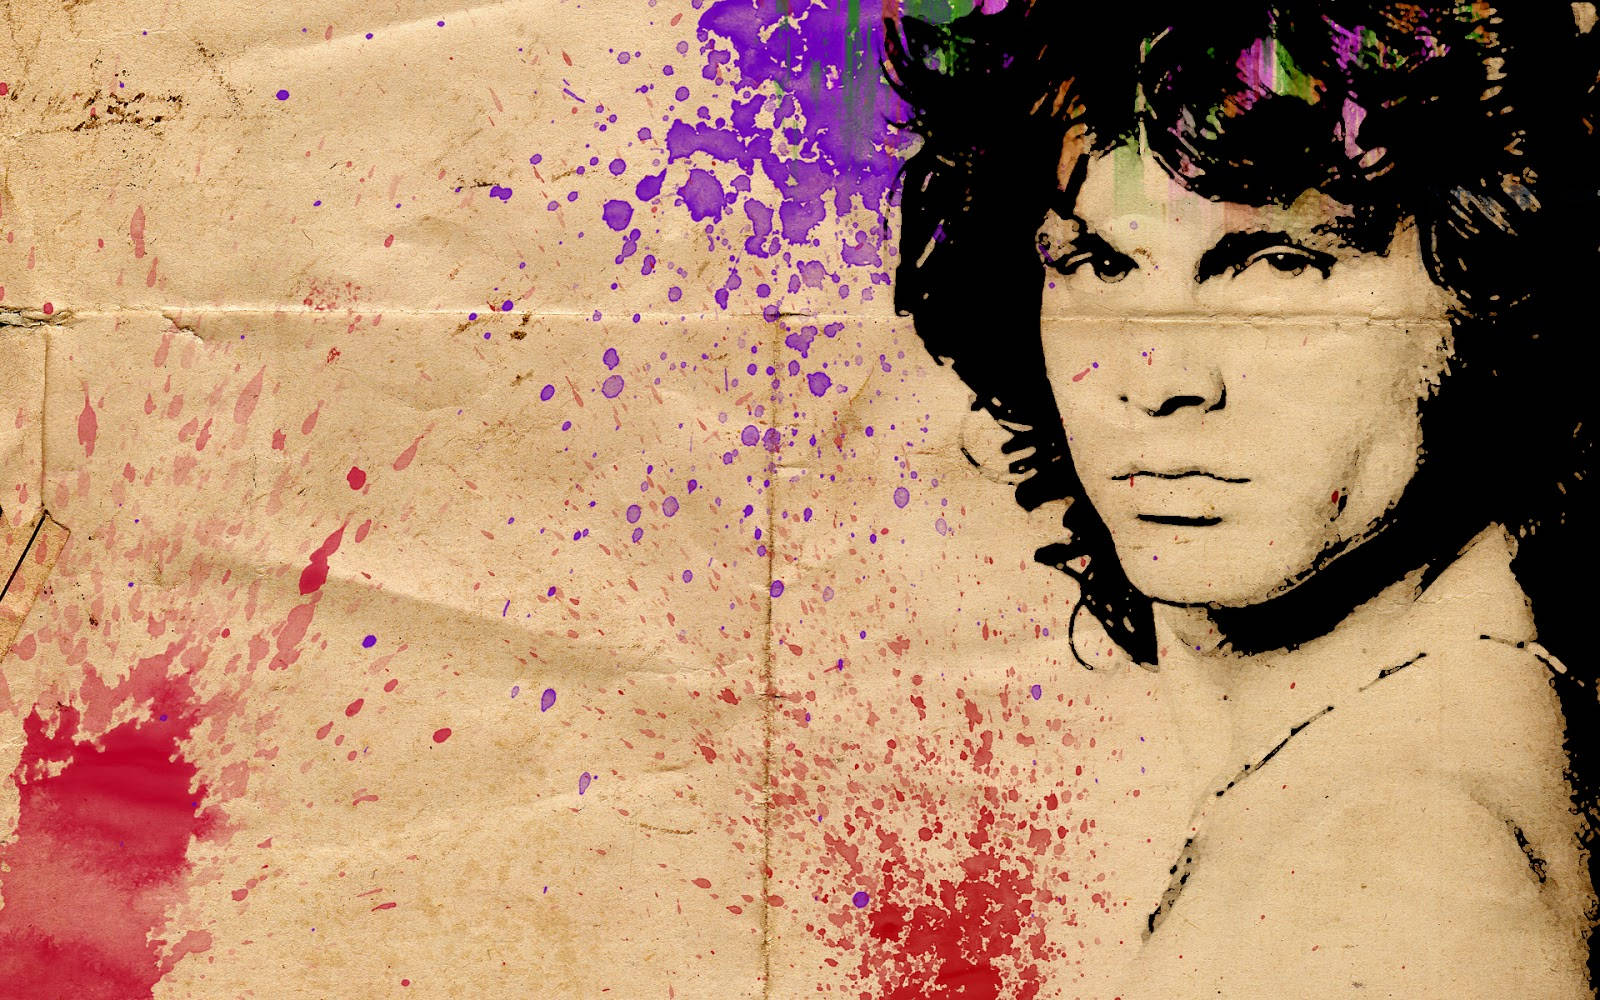 Caption: Colorful Abstract Interpretation Of Rock Legend Jim Morrison